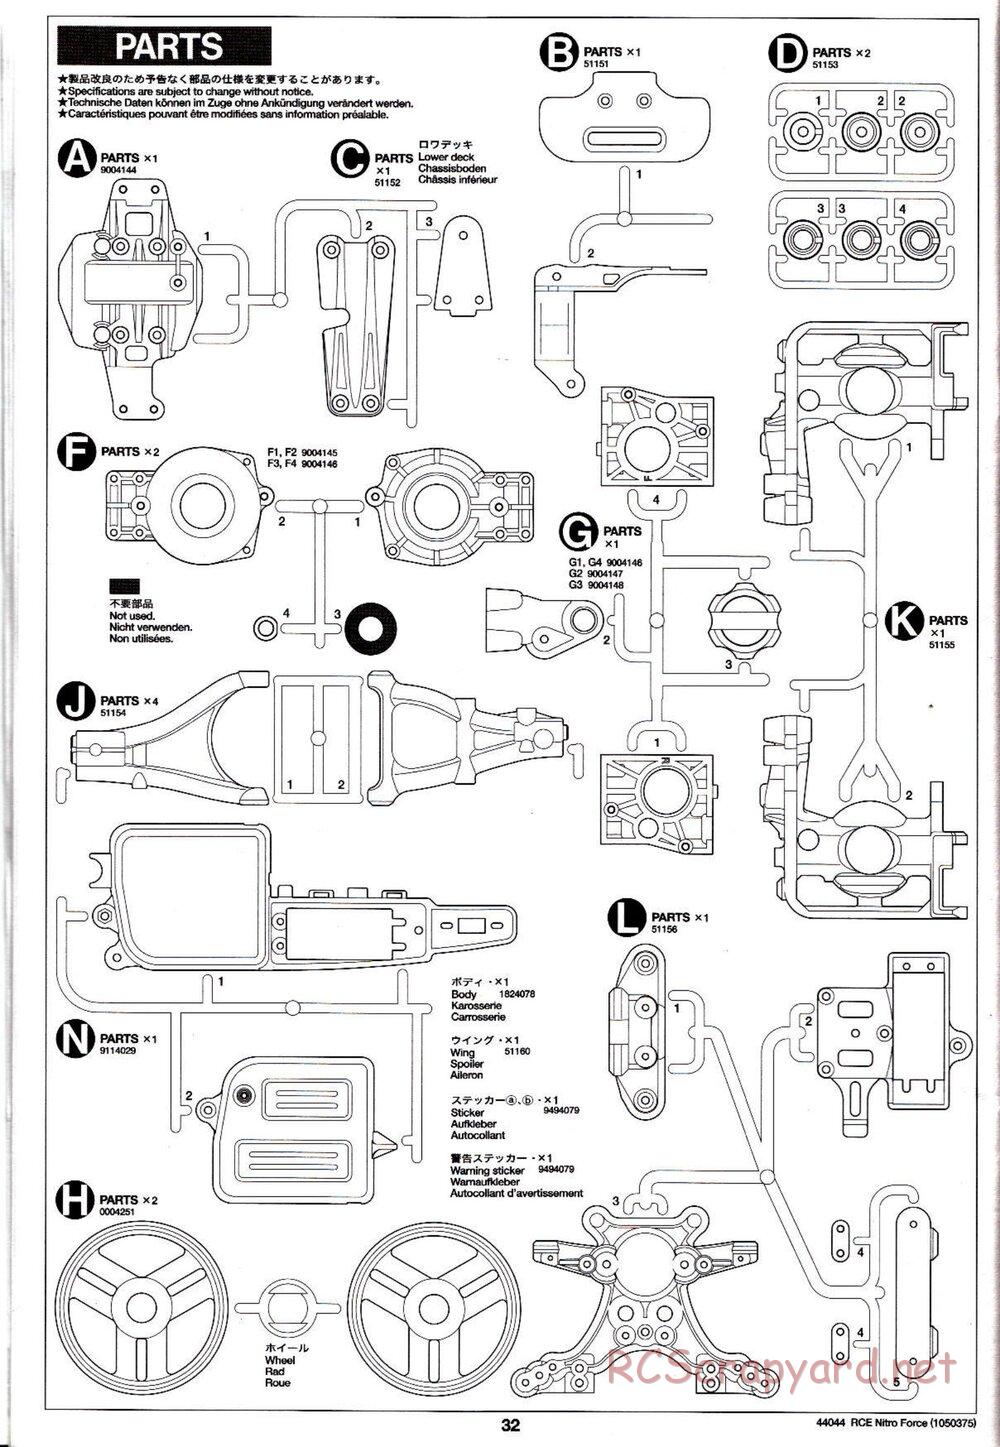 Tamiya - Nitro Force - NDF-01 Chassis - Manual - Page 32